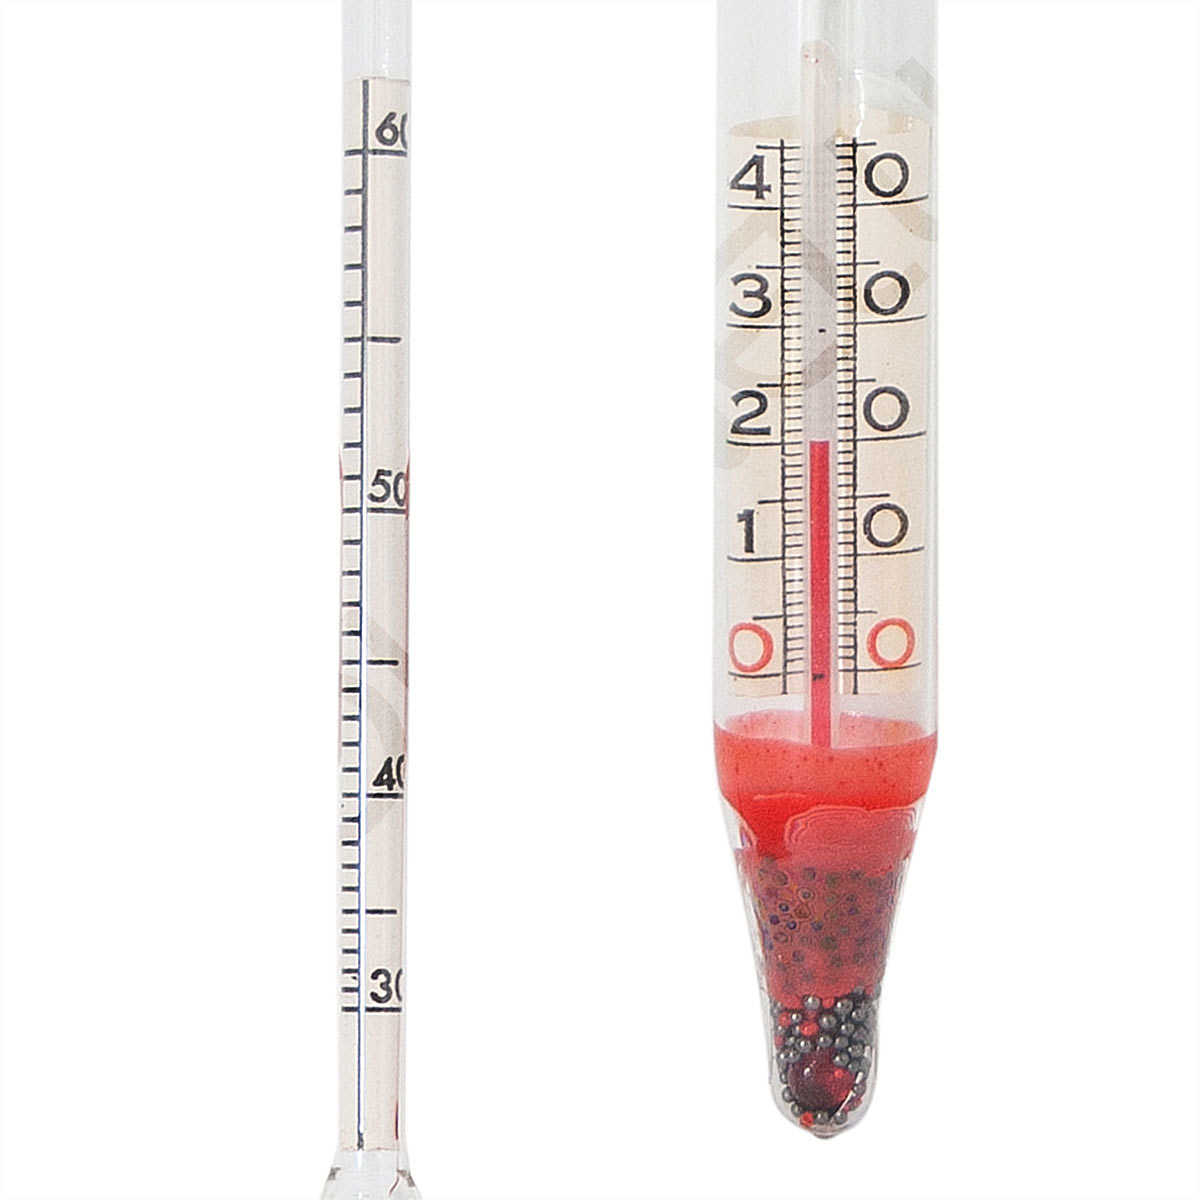 Hydromètre alcoomètre mesure de la tenue en alcool avec température (0-100%)